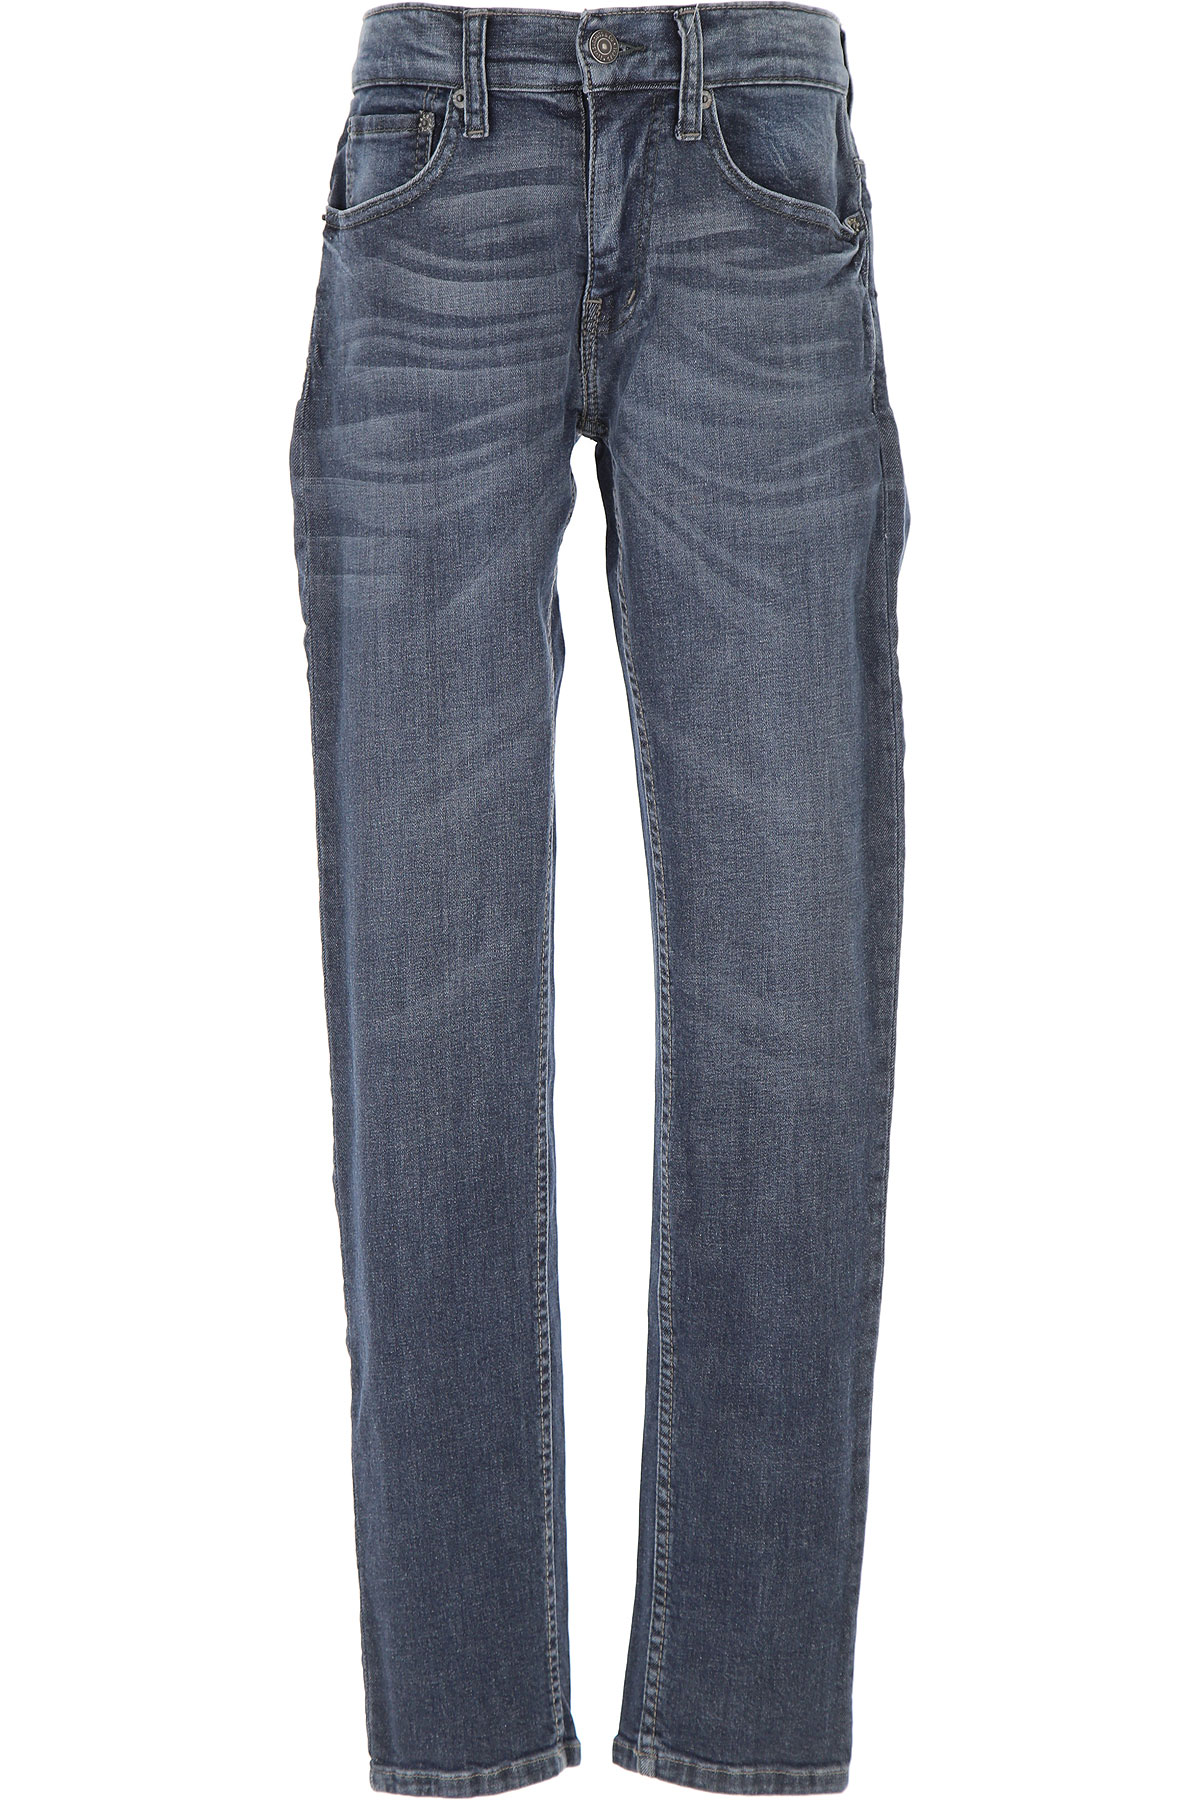 $16.99 - Elastic Waist Harem Style Kids Jeans Denim Boy Jeans For 4-15 ...